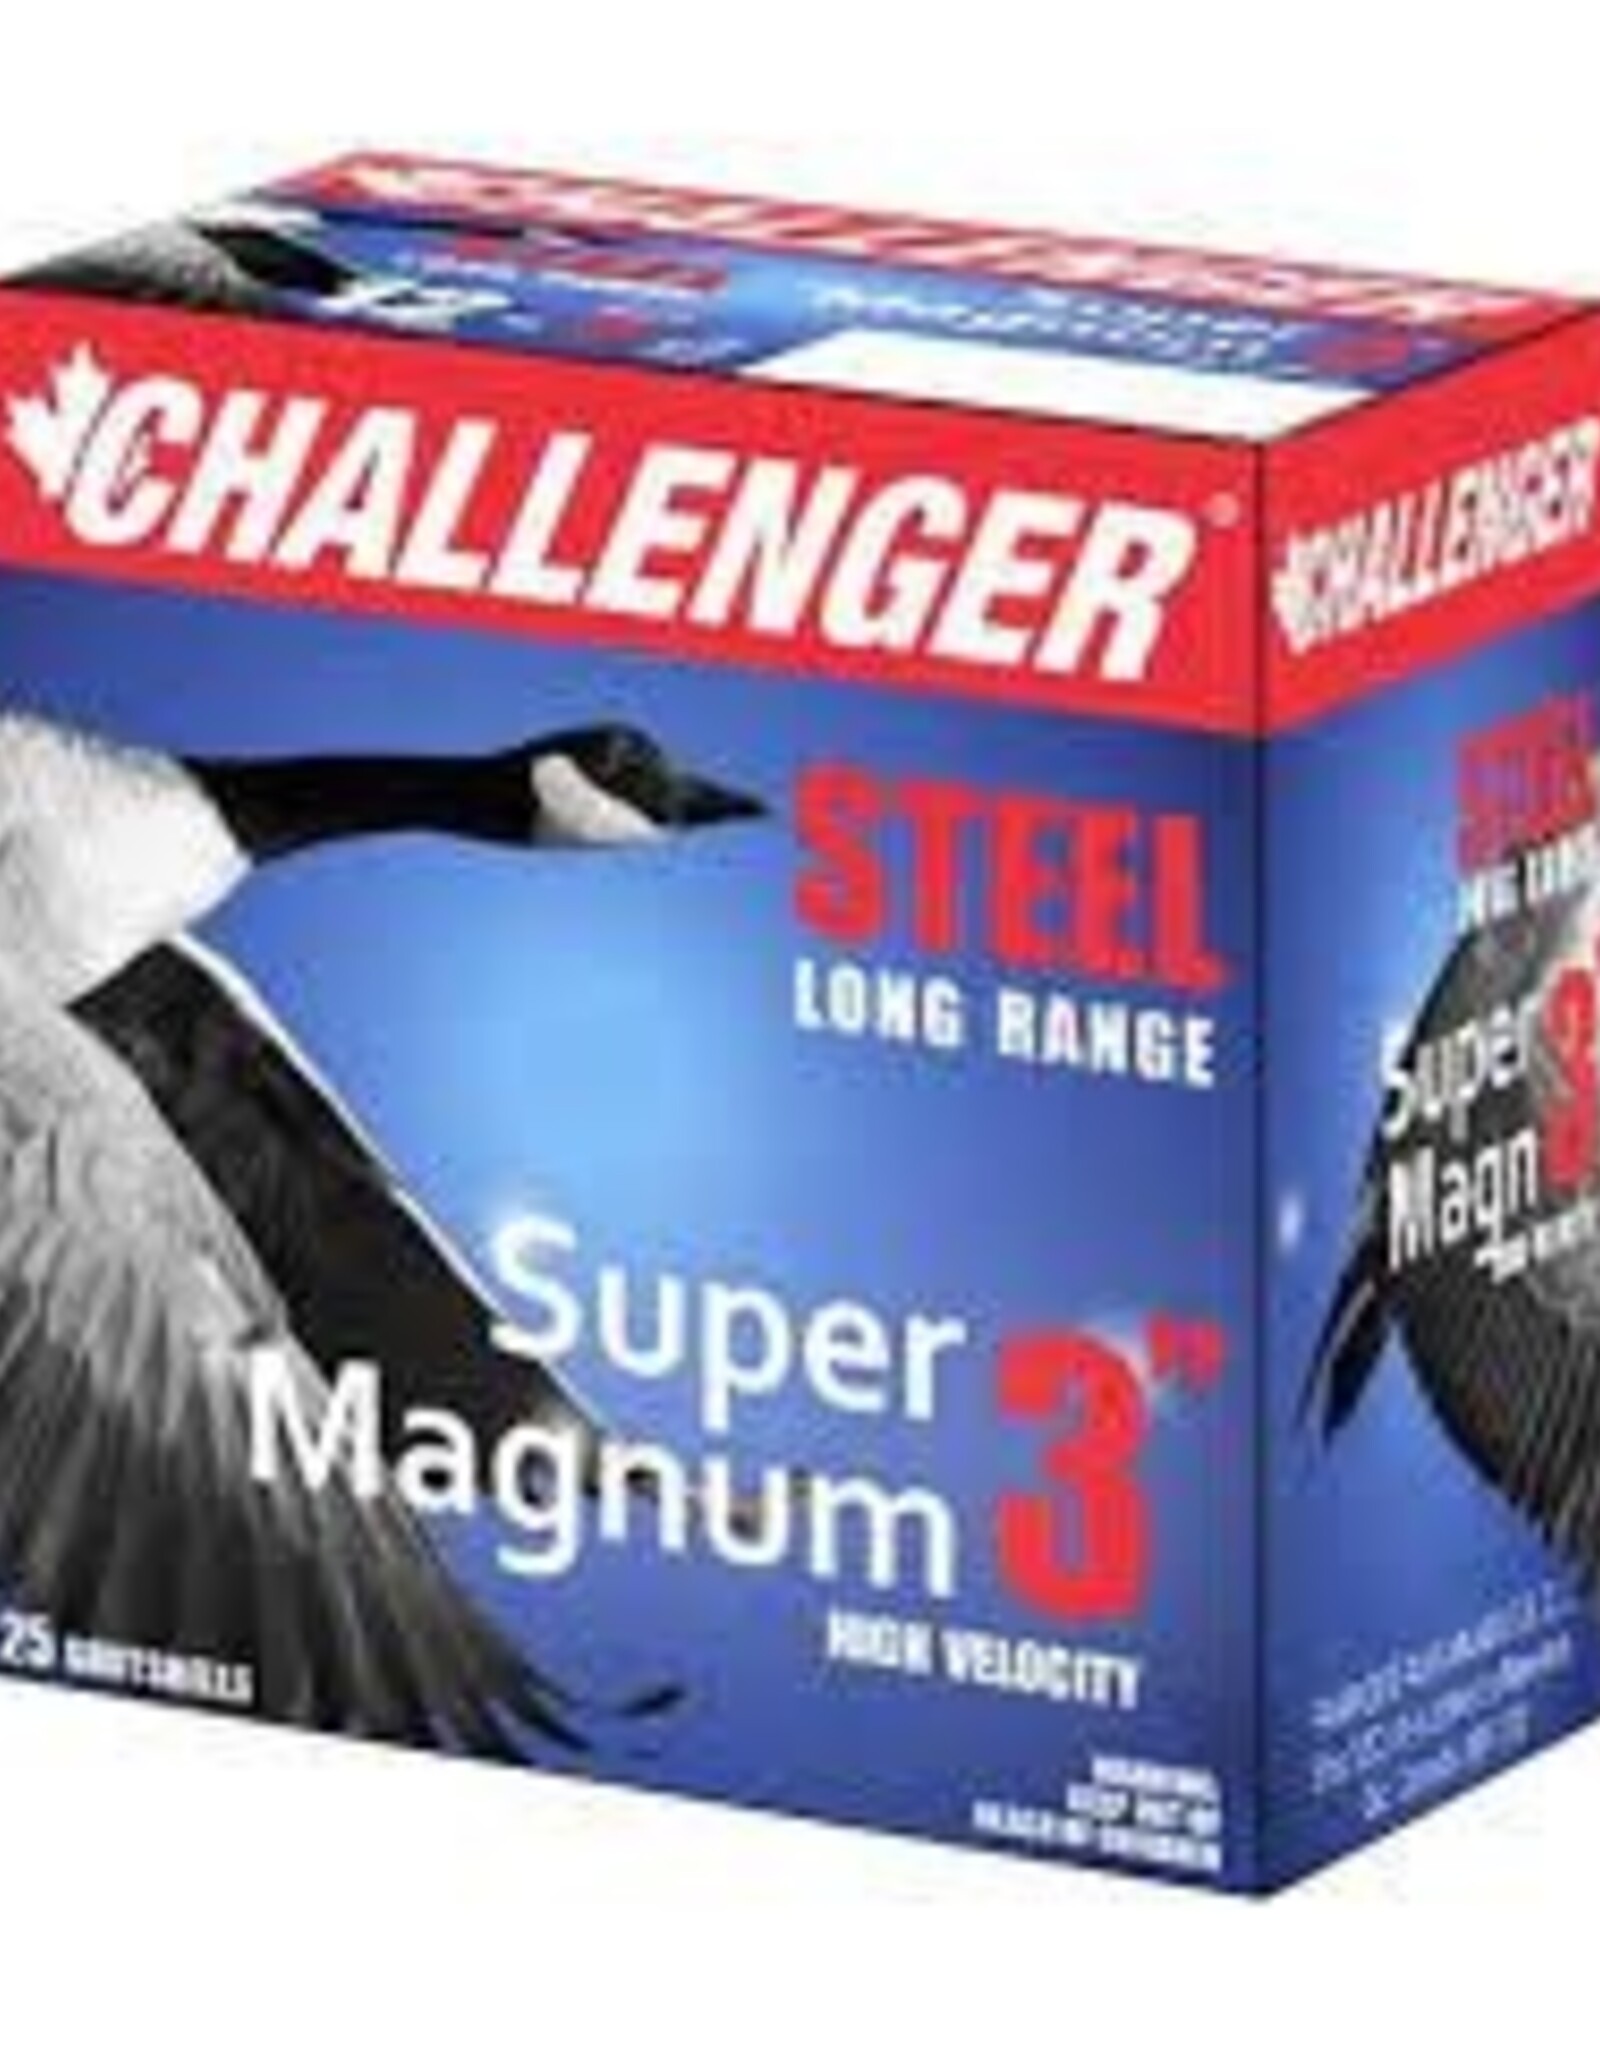 Challenger 12 GA 3" #2 1 3/8 Oz Super Magnum